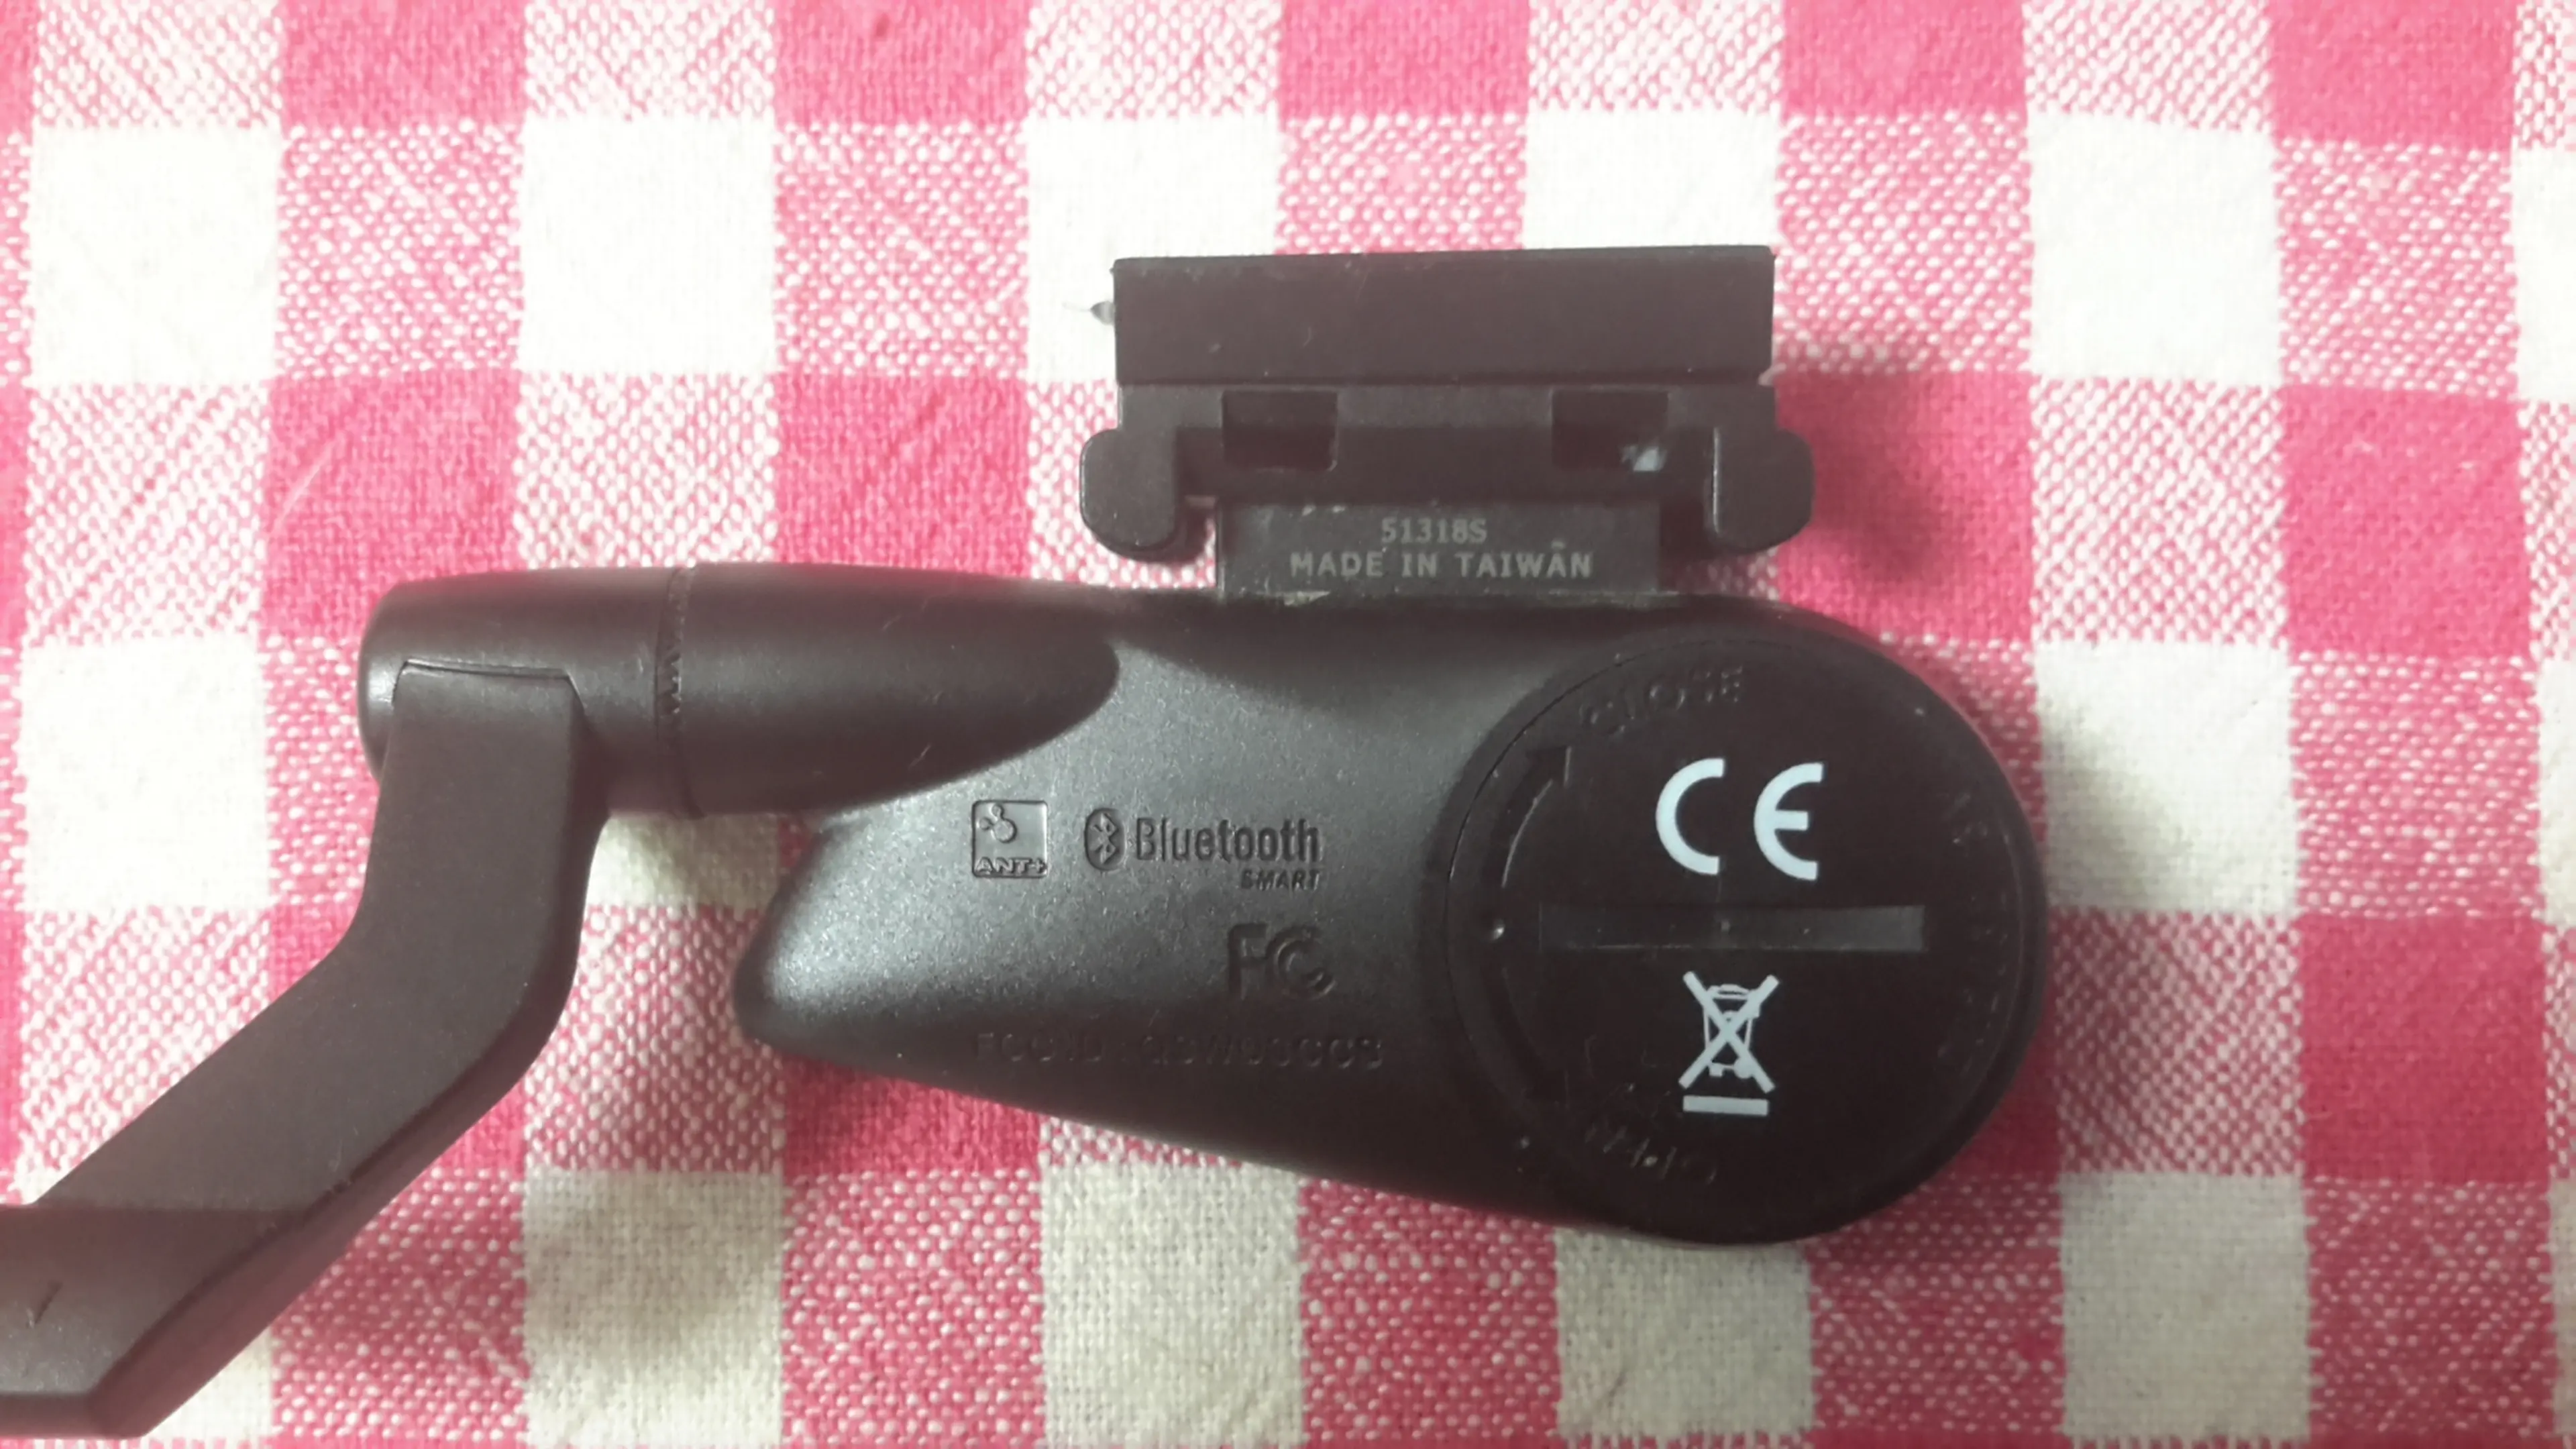 8. Sigma R2 Duo - Senzor Combo Viteza/Cadenta - ANT+ / Smart Bluetooth